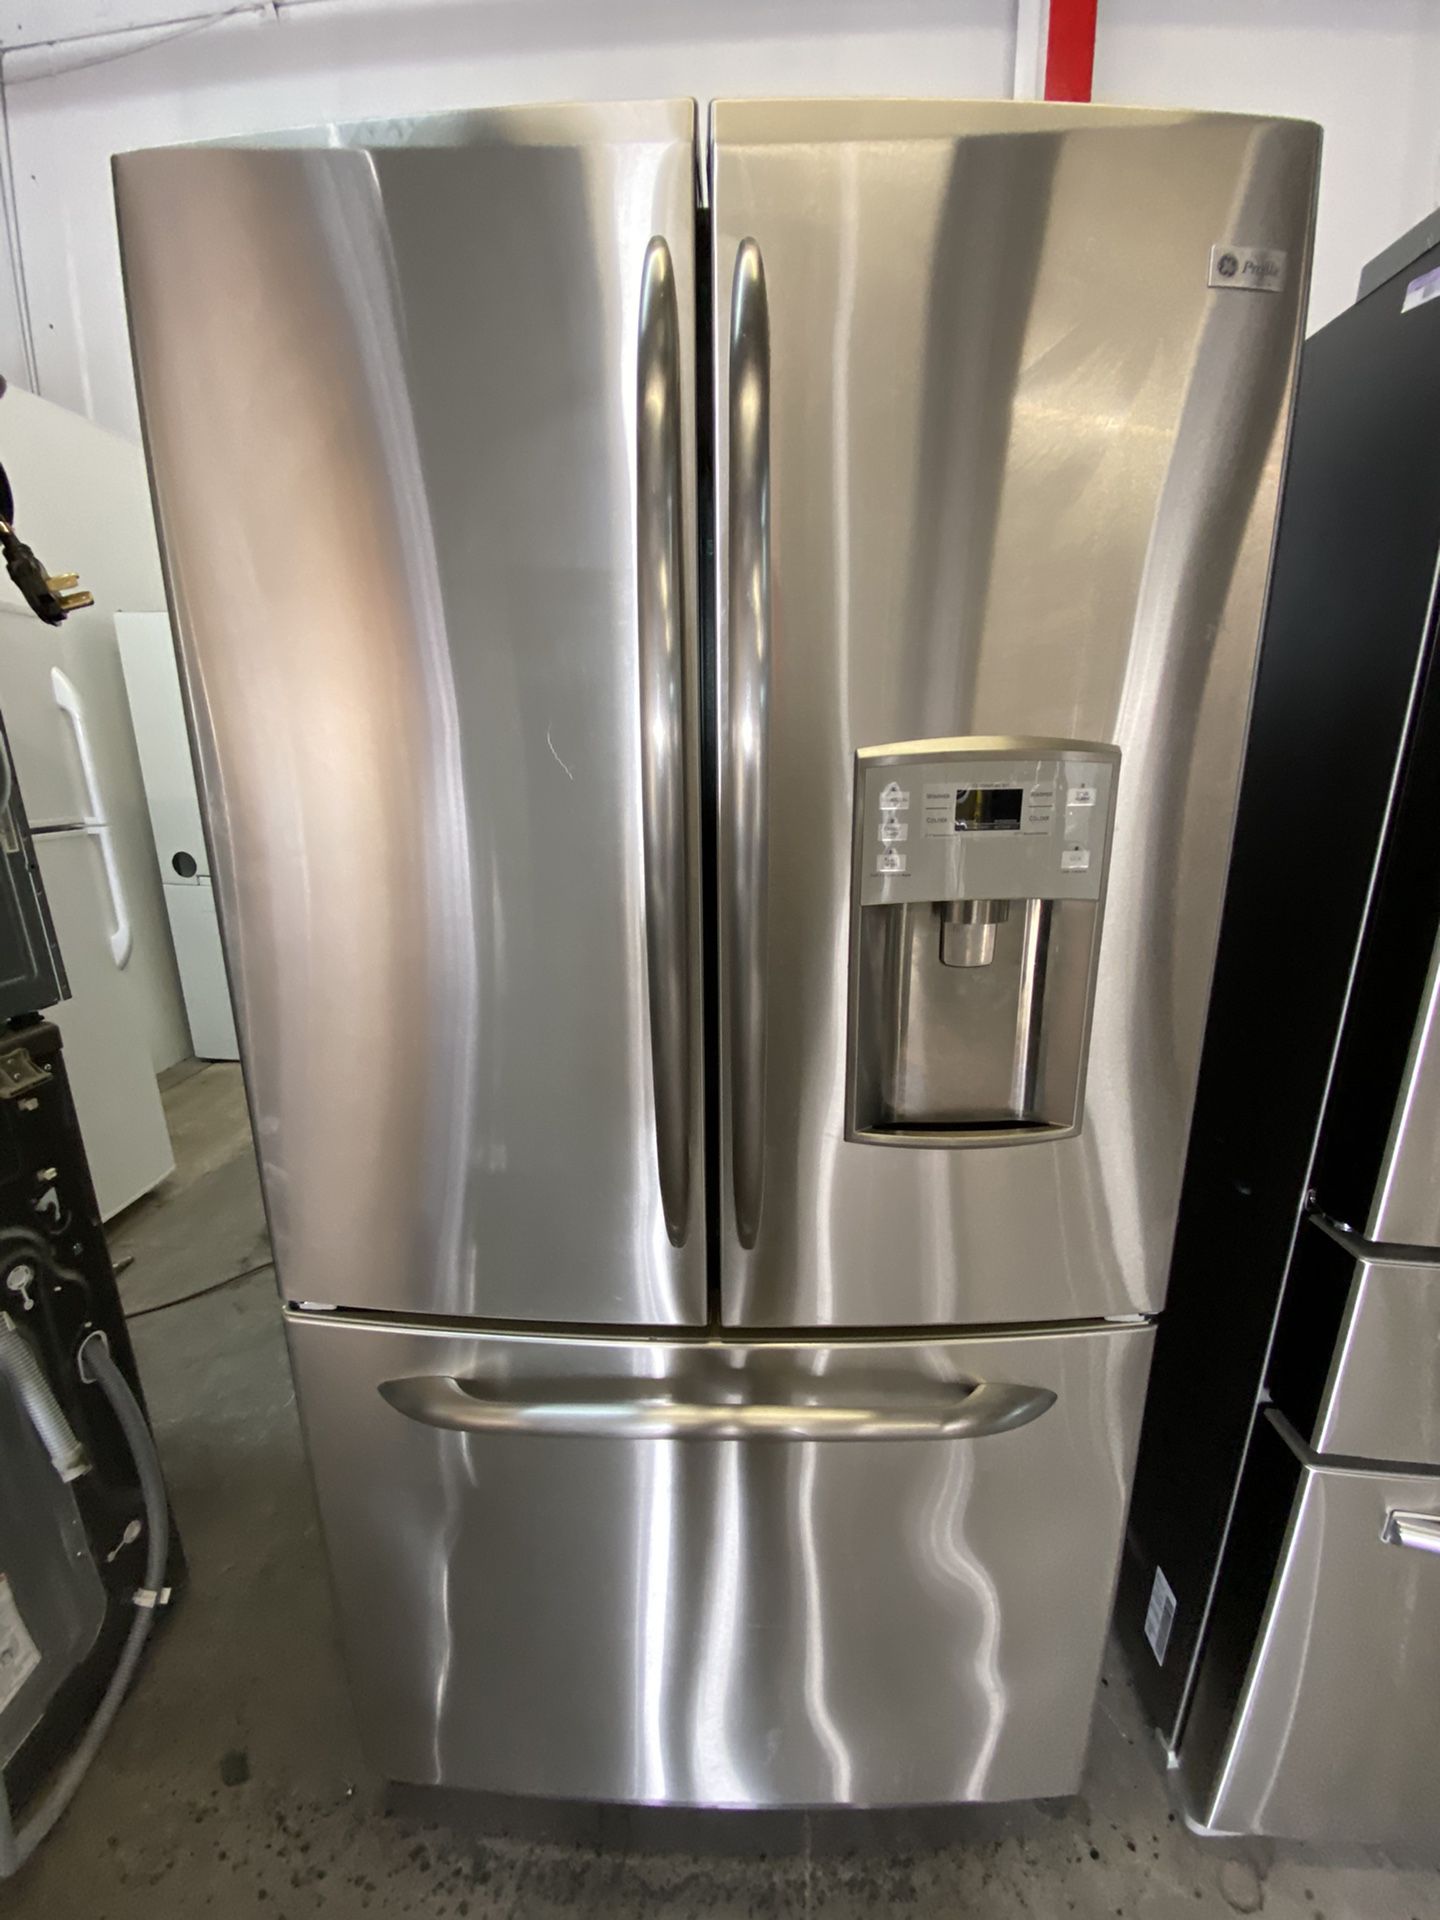 GE Profile counter depth refrigerator